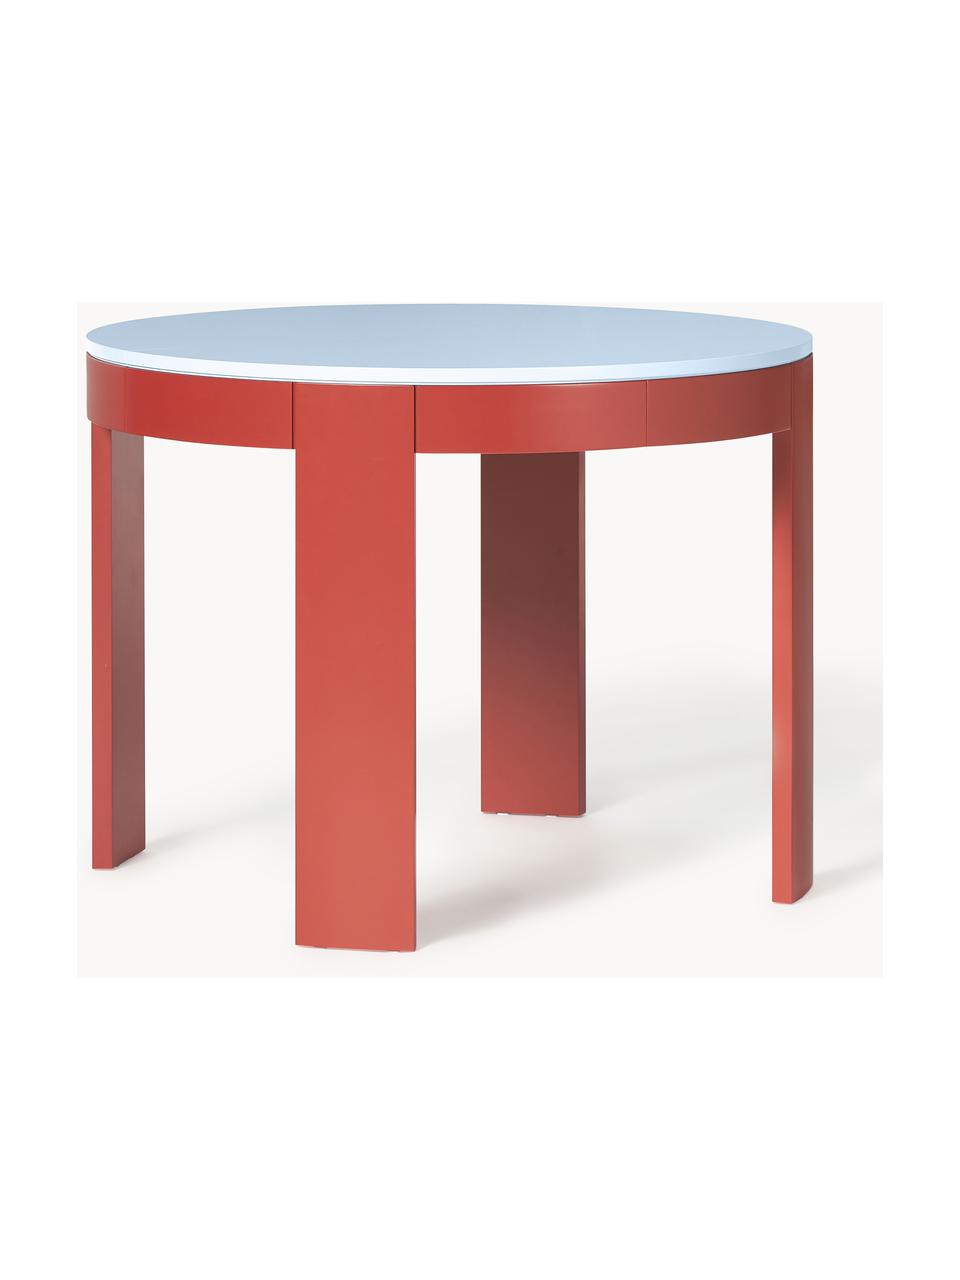 Table extensible Samos, 100 - 140 x 75 cm, Bleu clair, rouge, larg. 100 - 140 x prof. 100 cm